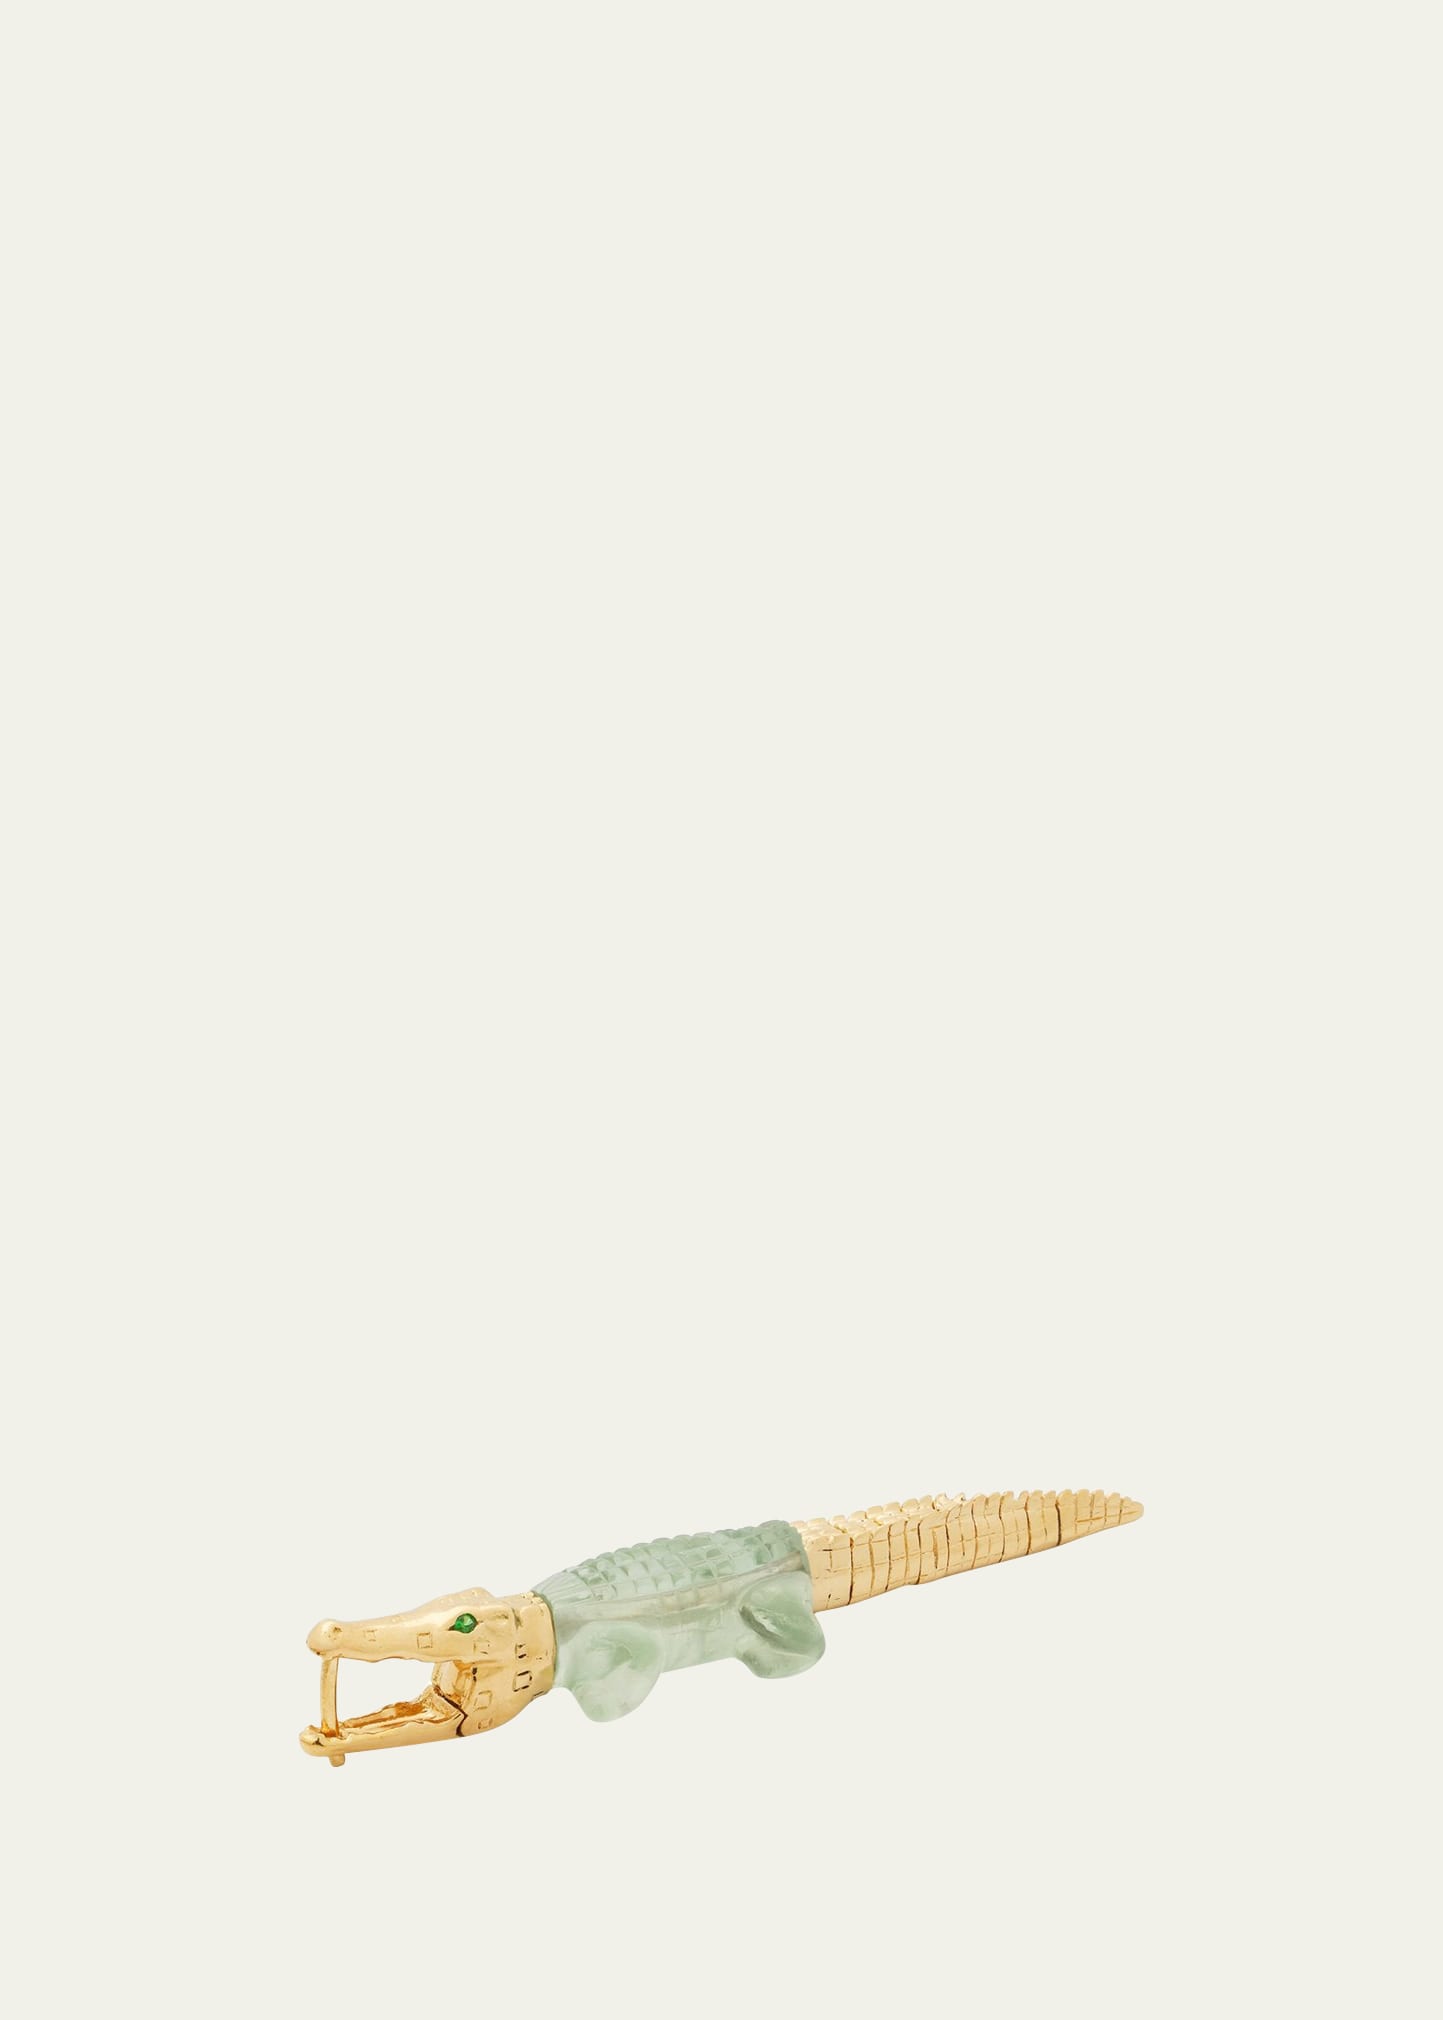 18K Yellow Gold Alligator Bite Earring with Amethyst and Tsavorite